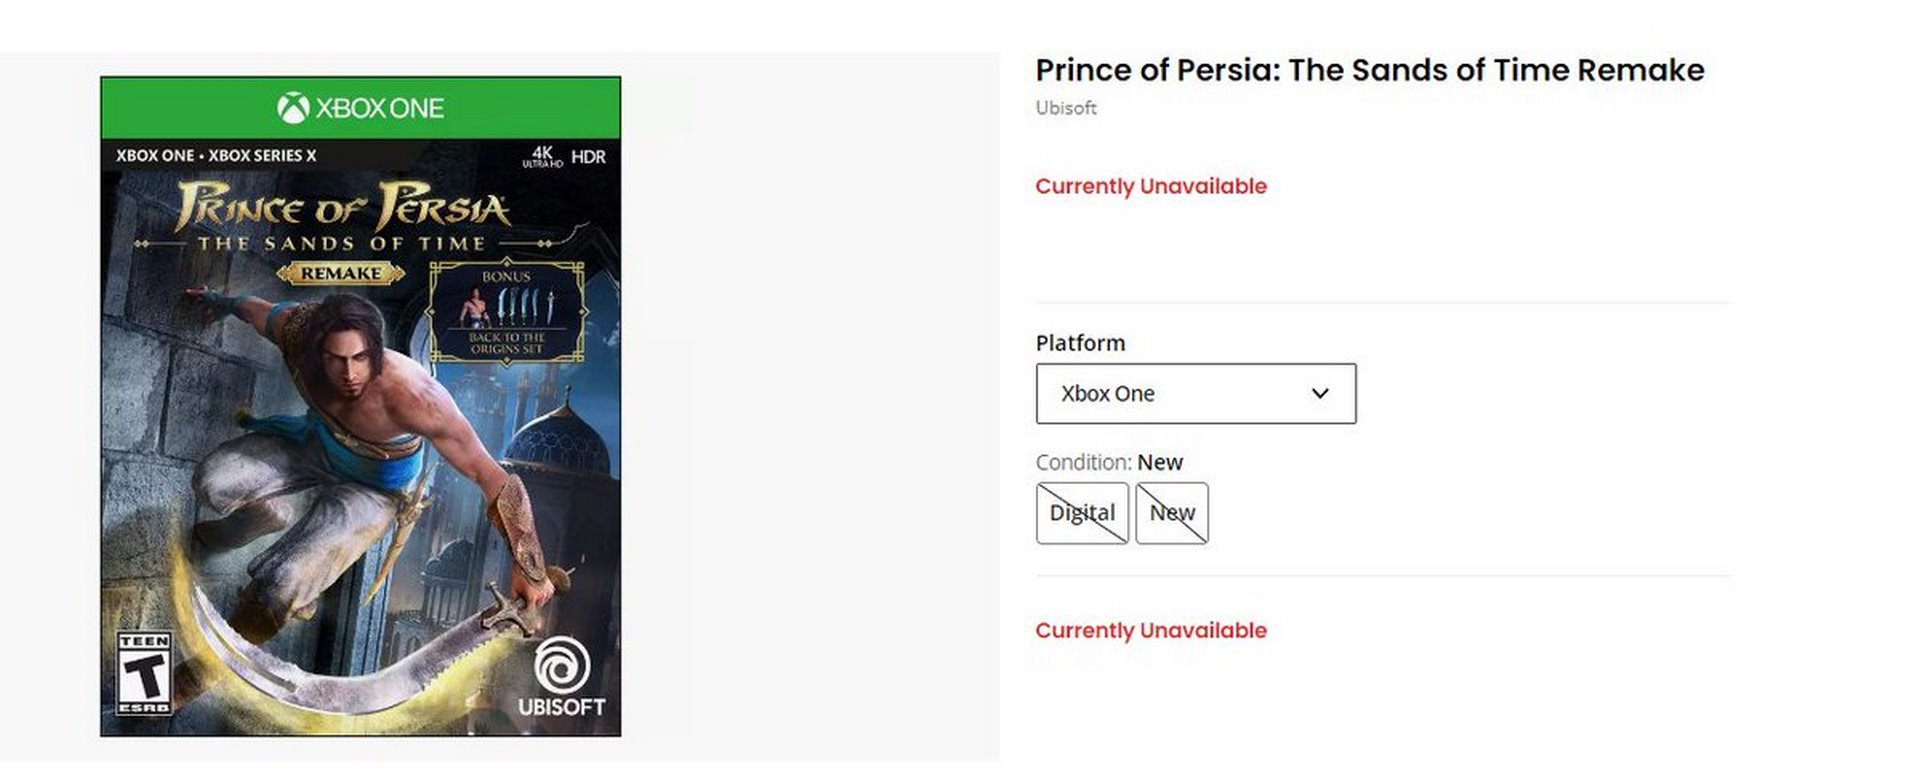 prince of perisa remake preorder  Image of prince of perisa remake preorder